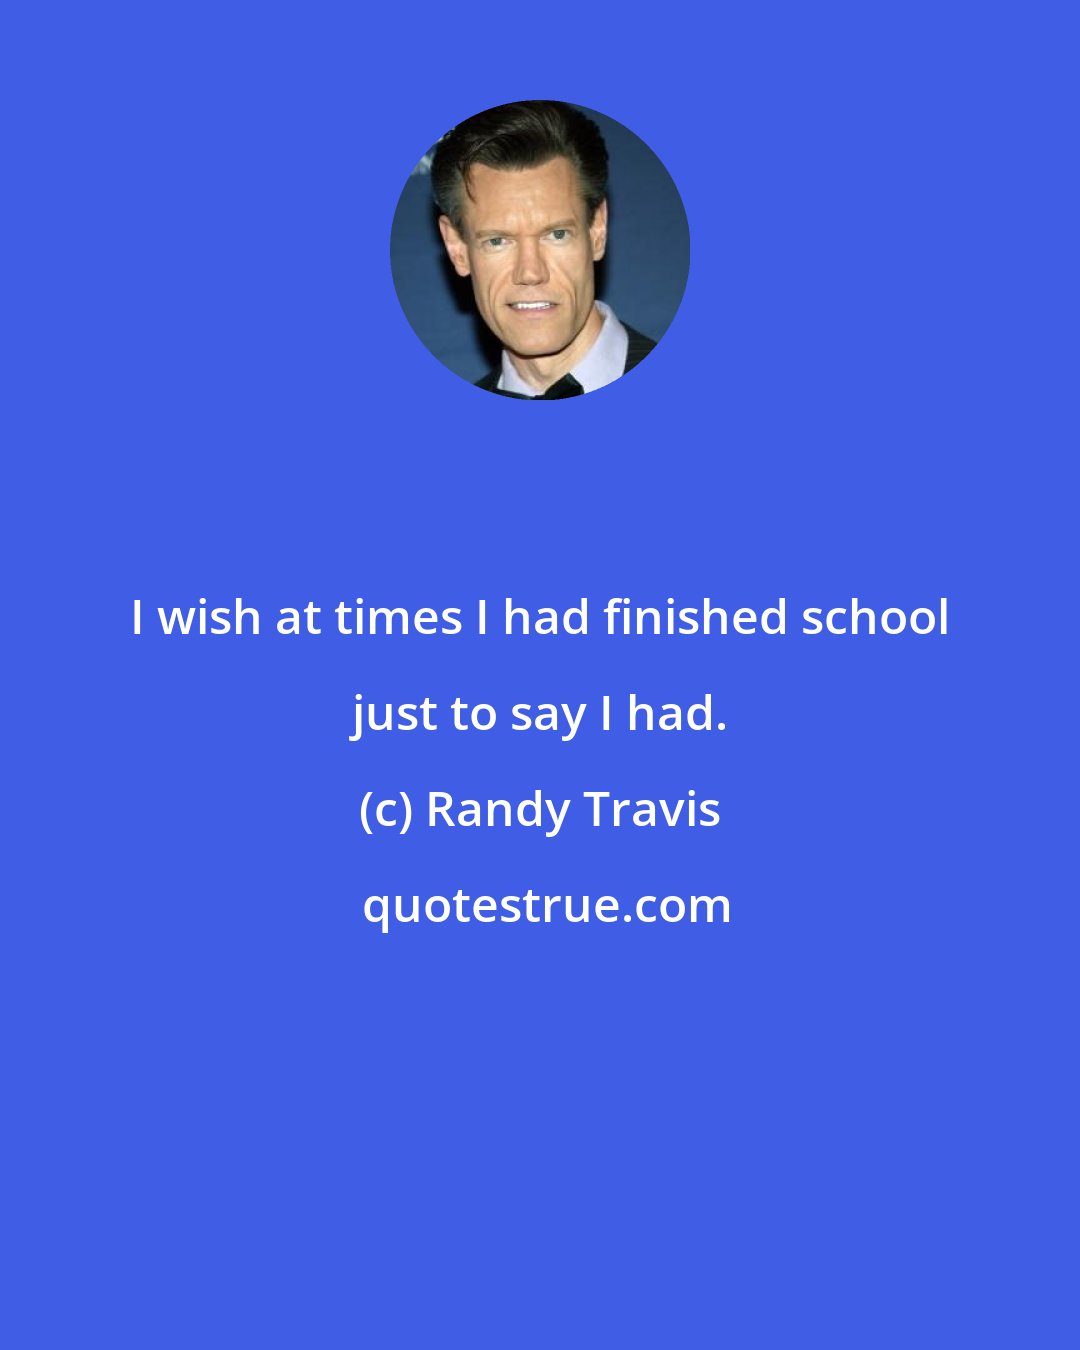 Randy Travis: I wish at times I had finished school just to say I had.